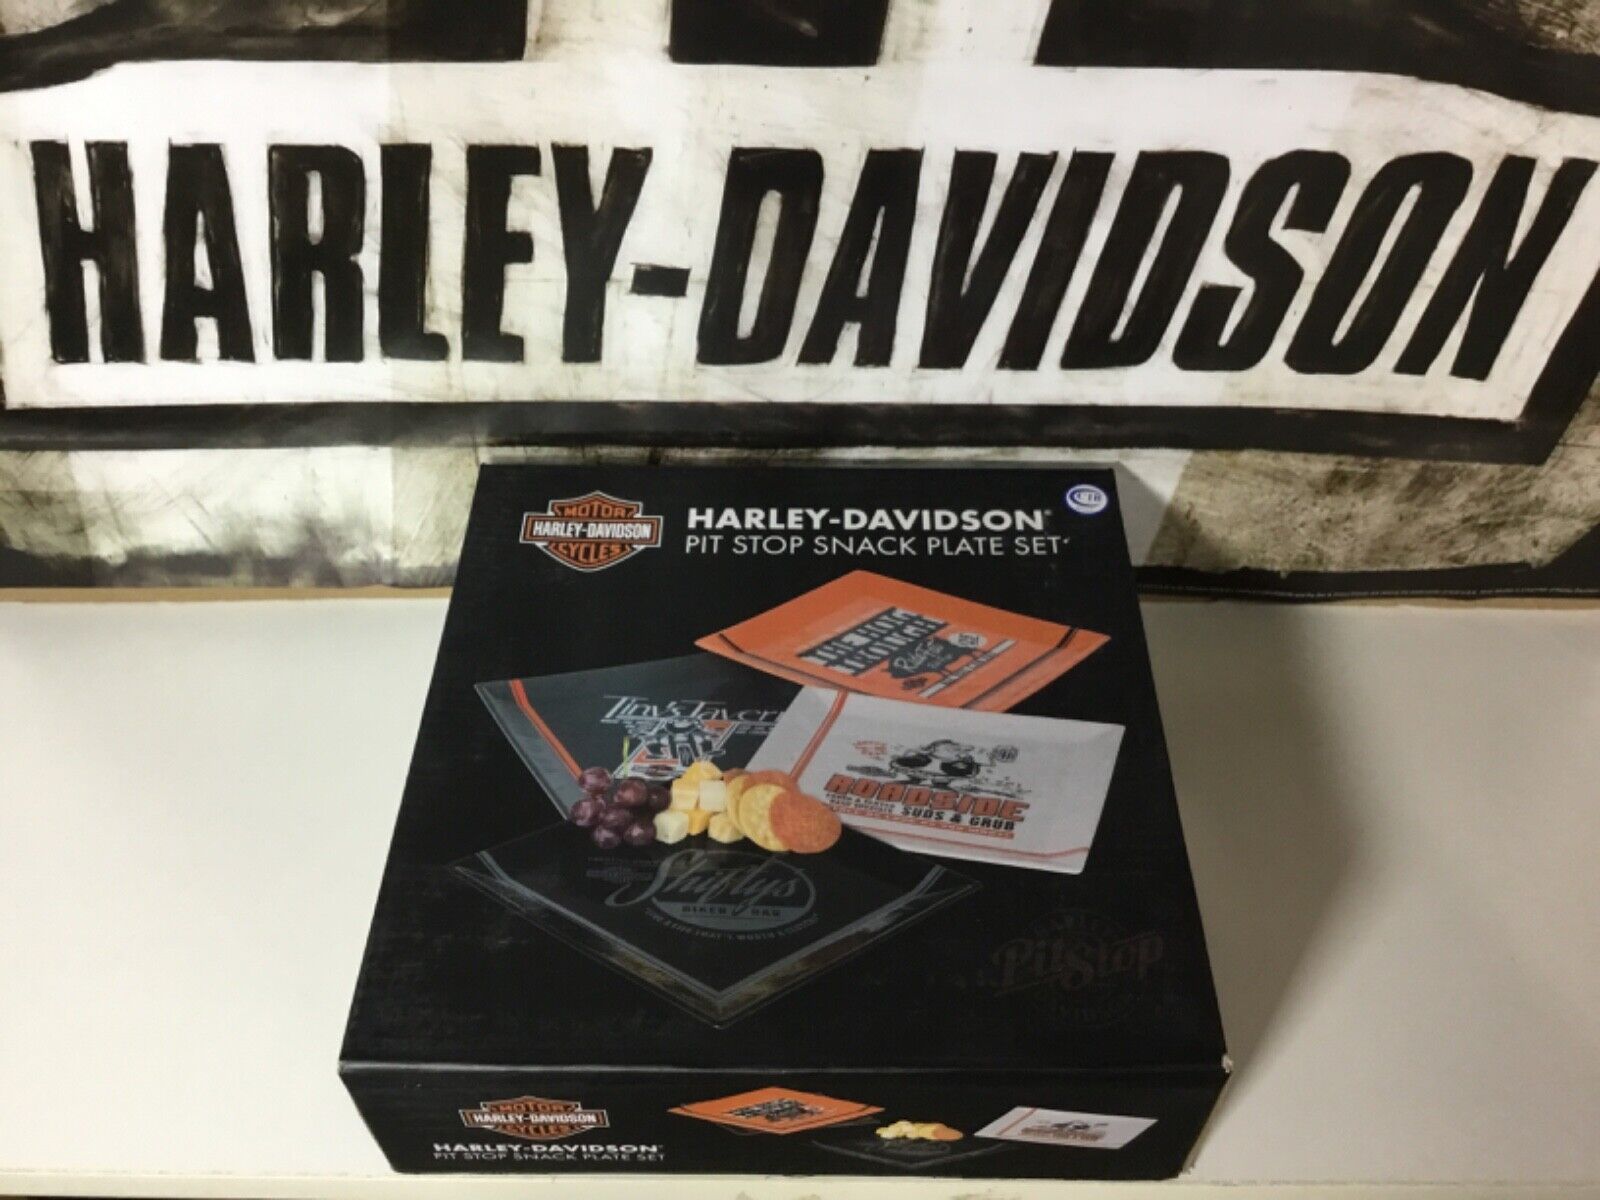 Harley Davidson Pit Stop Snack Plate Set